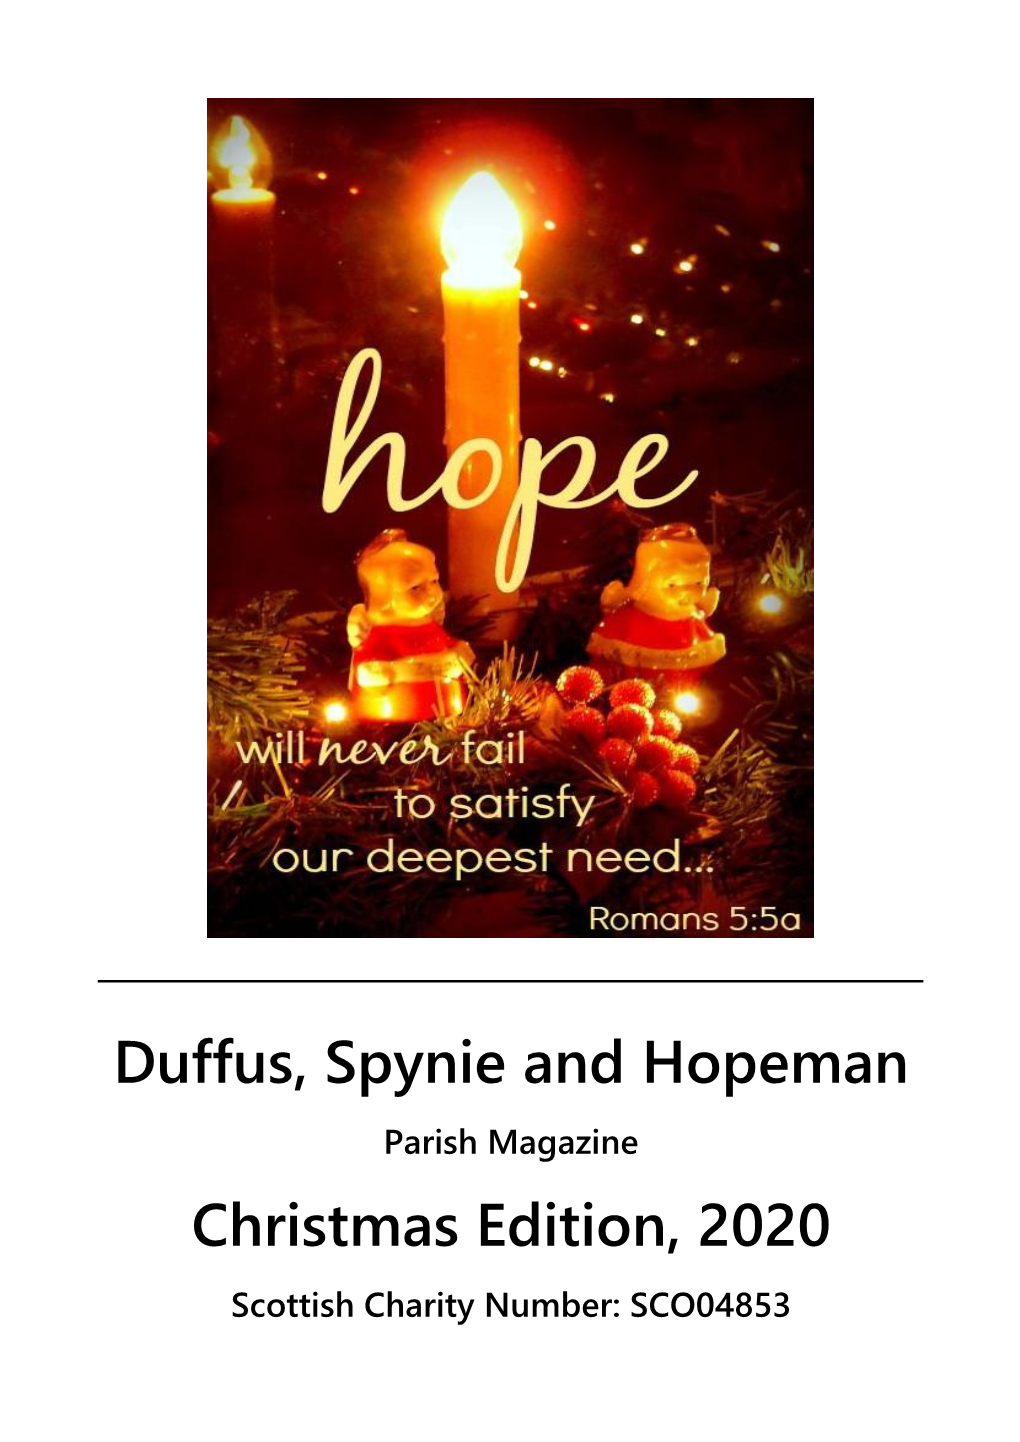 Duffus, Spynie and Hopeman Christmas Edition, 2020